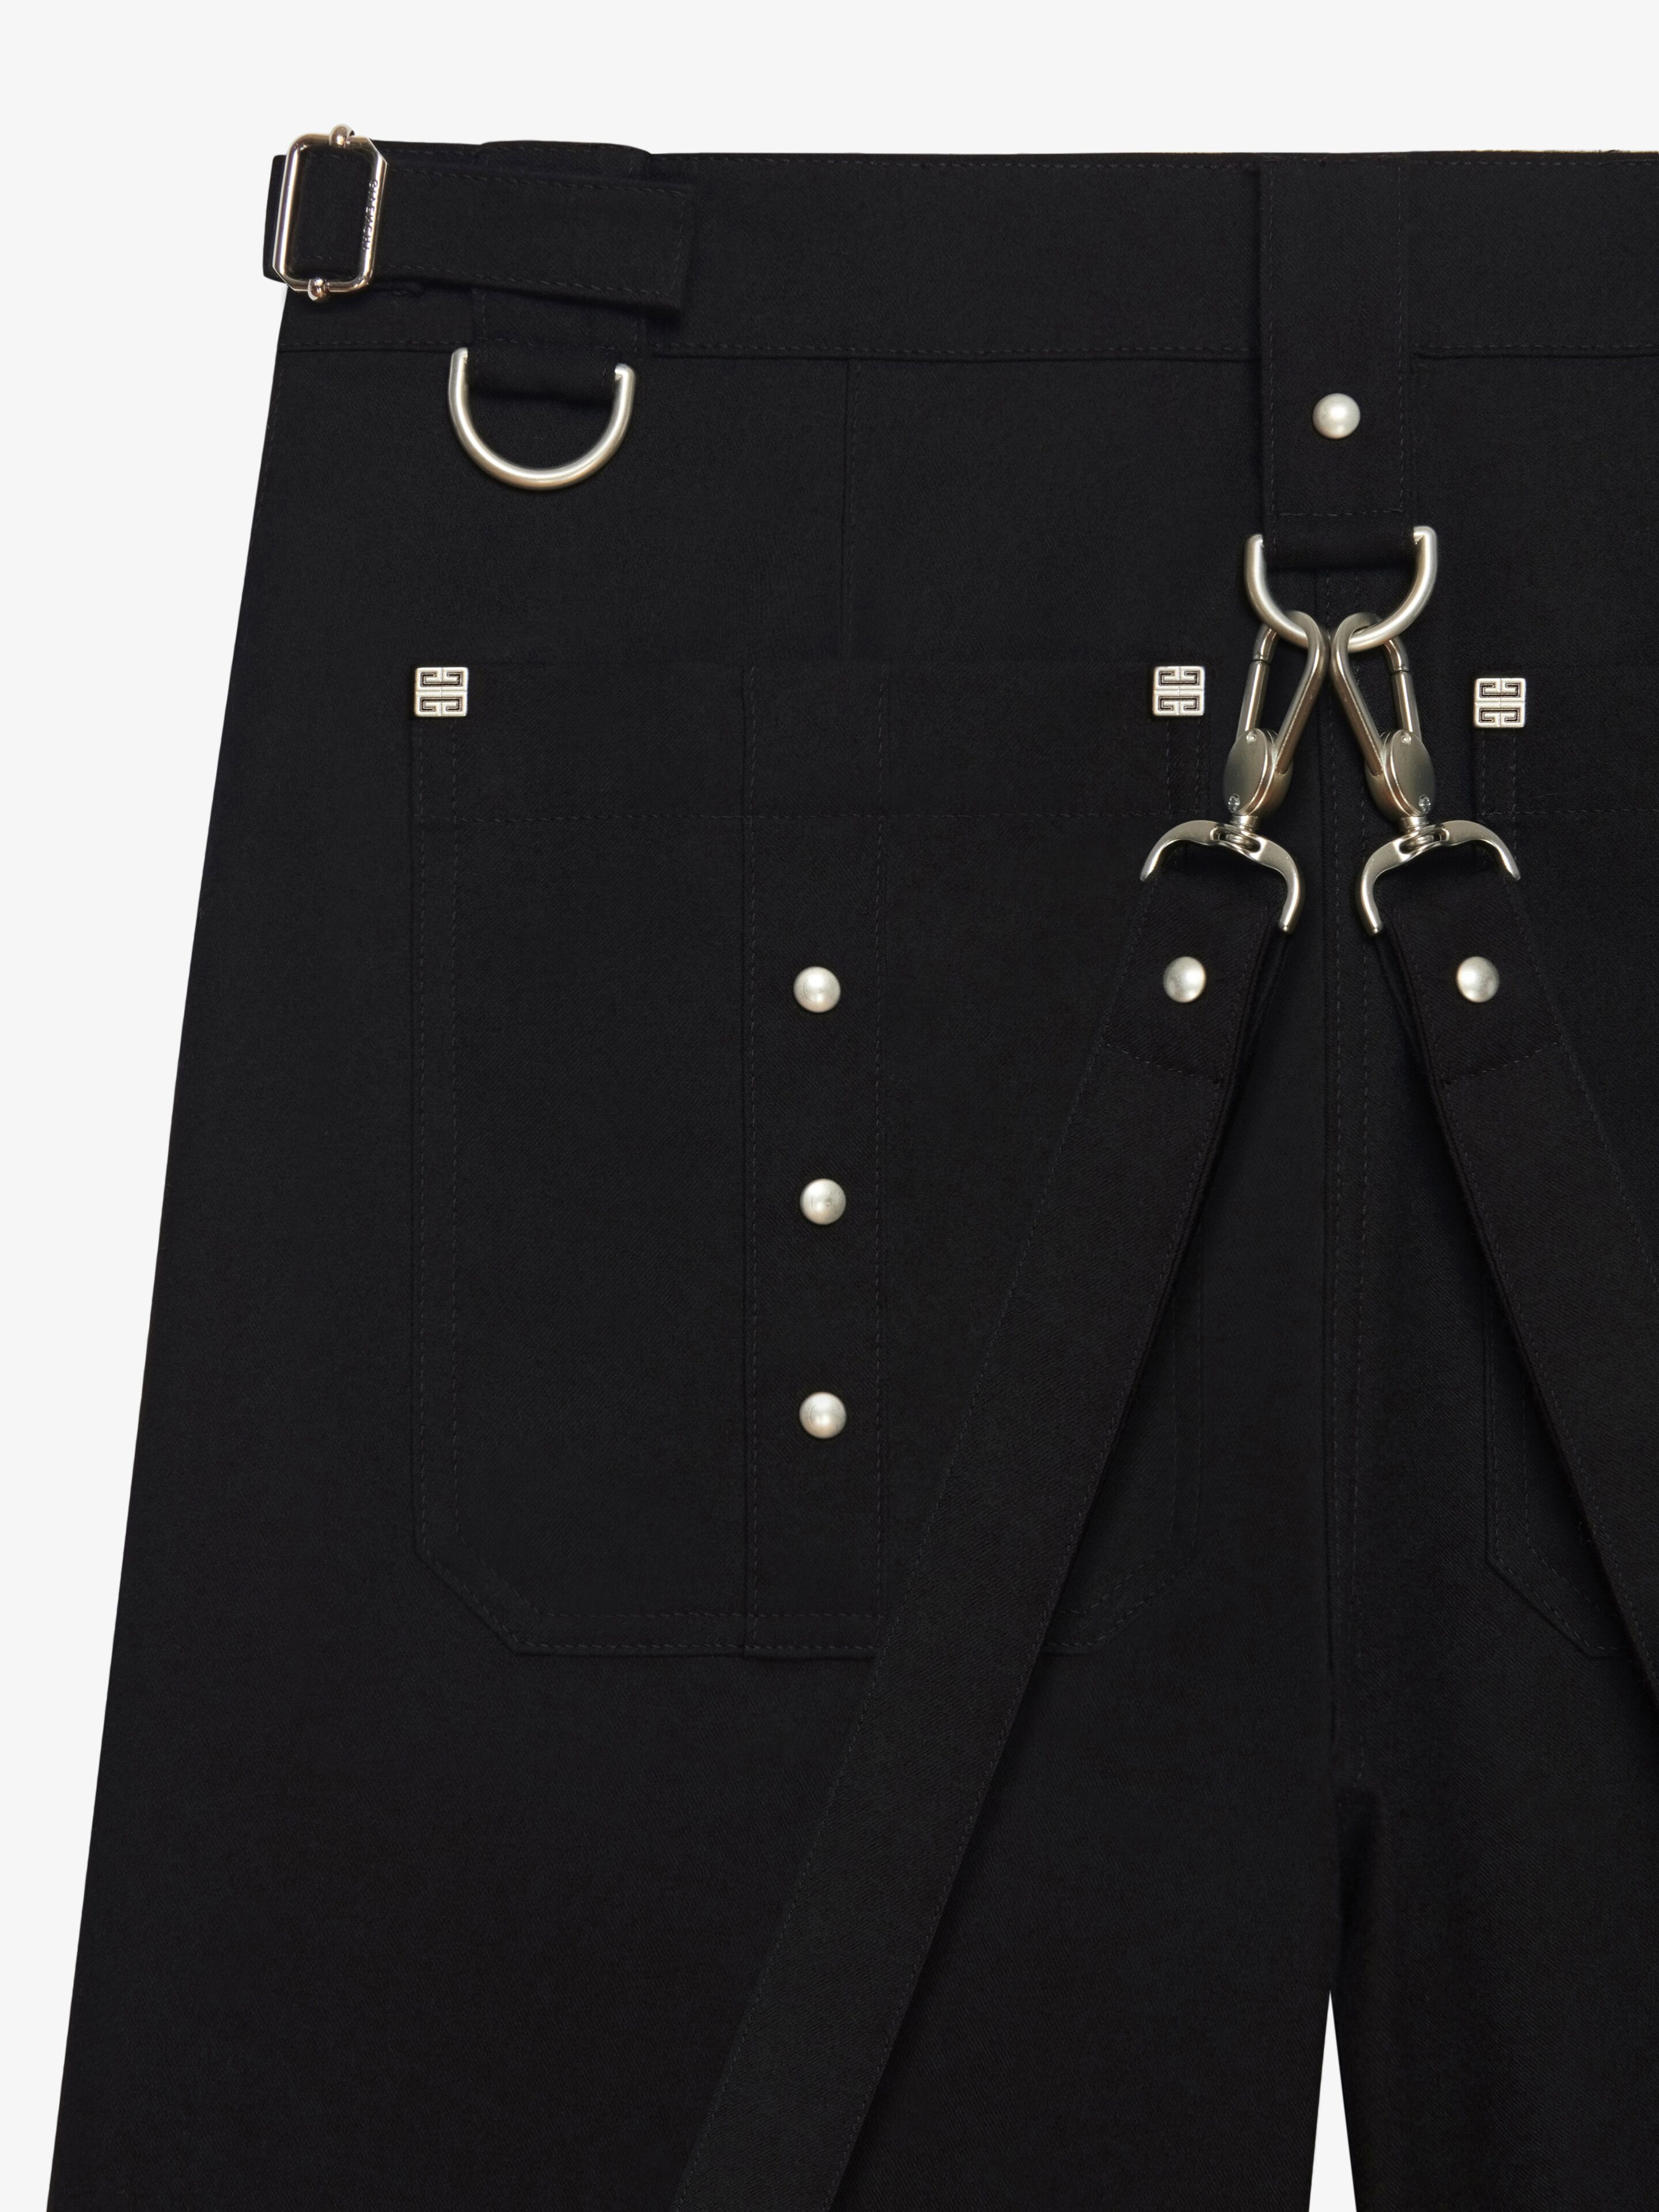 Givenchy Black Detachable Trousers